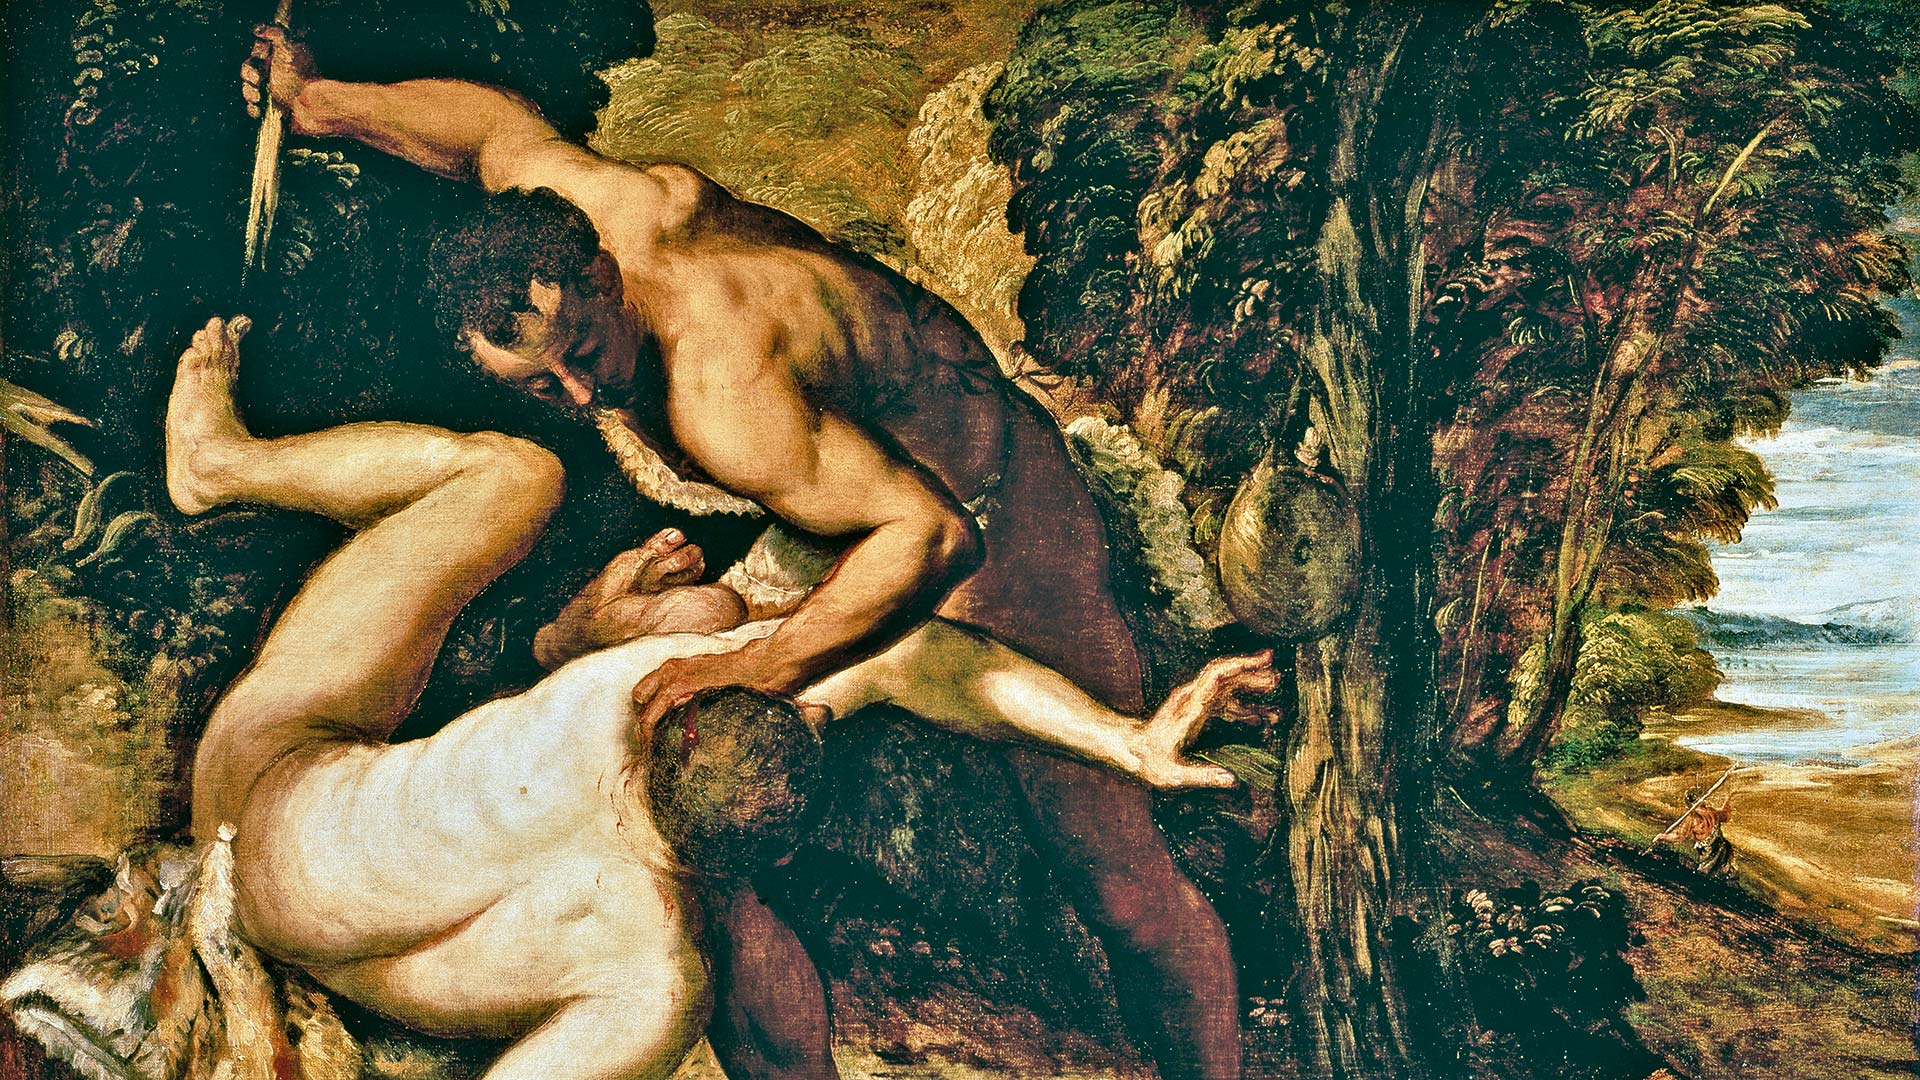 Tintoretto alias Jacopo Robusti 1518–1594. „Kain erschlägt Abel“, 1550/53.